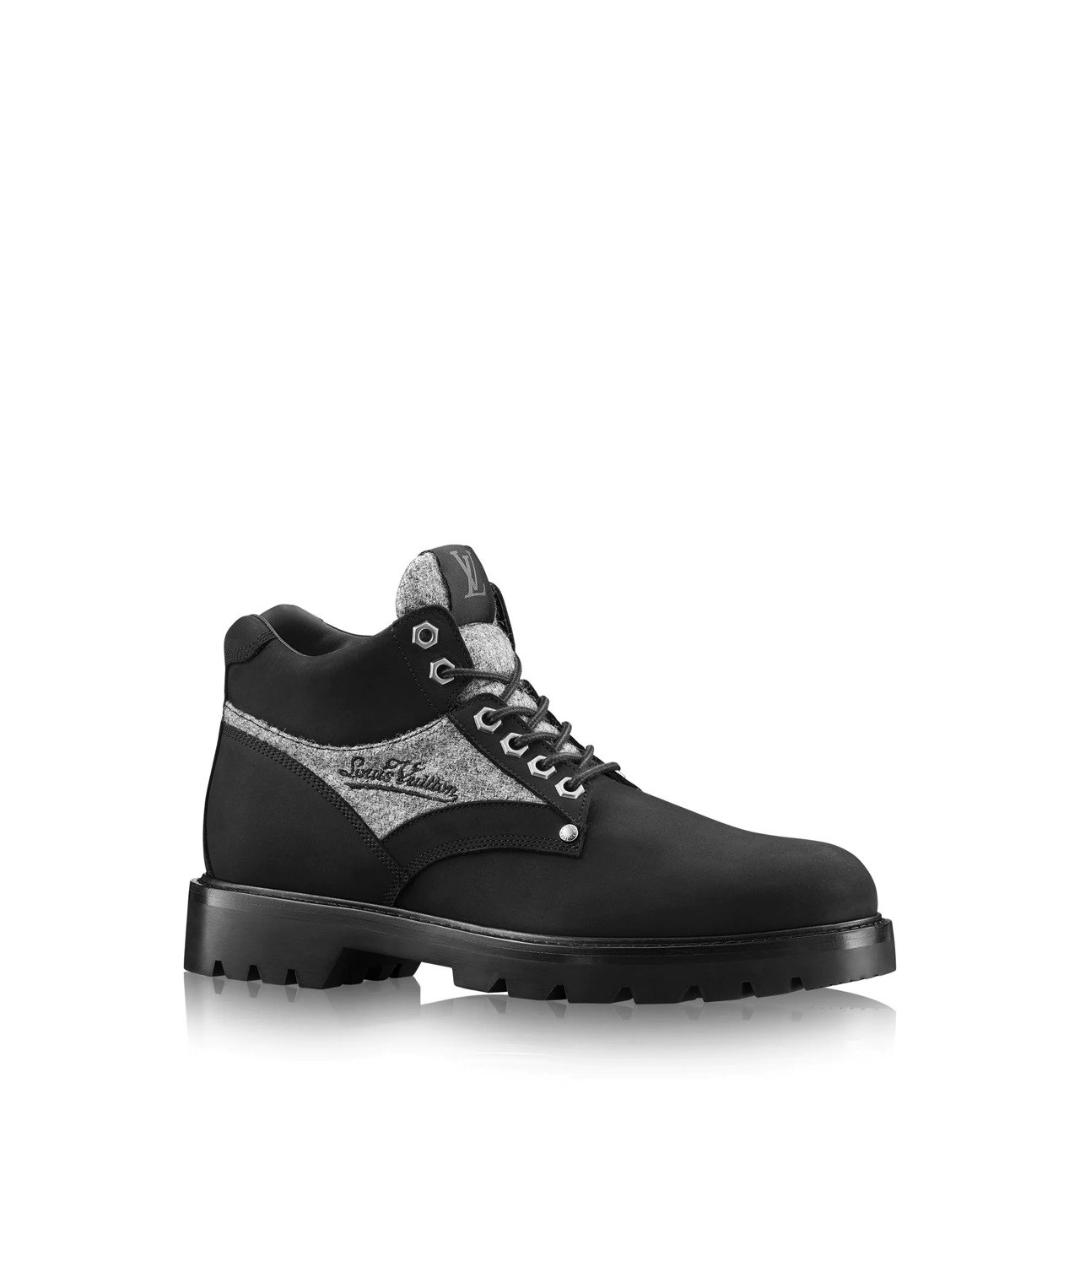 LOUIS VUITTON PRE-OWNED Черные нубуковые высокие ботинки, фото 1